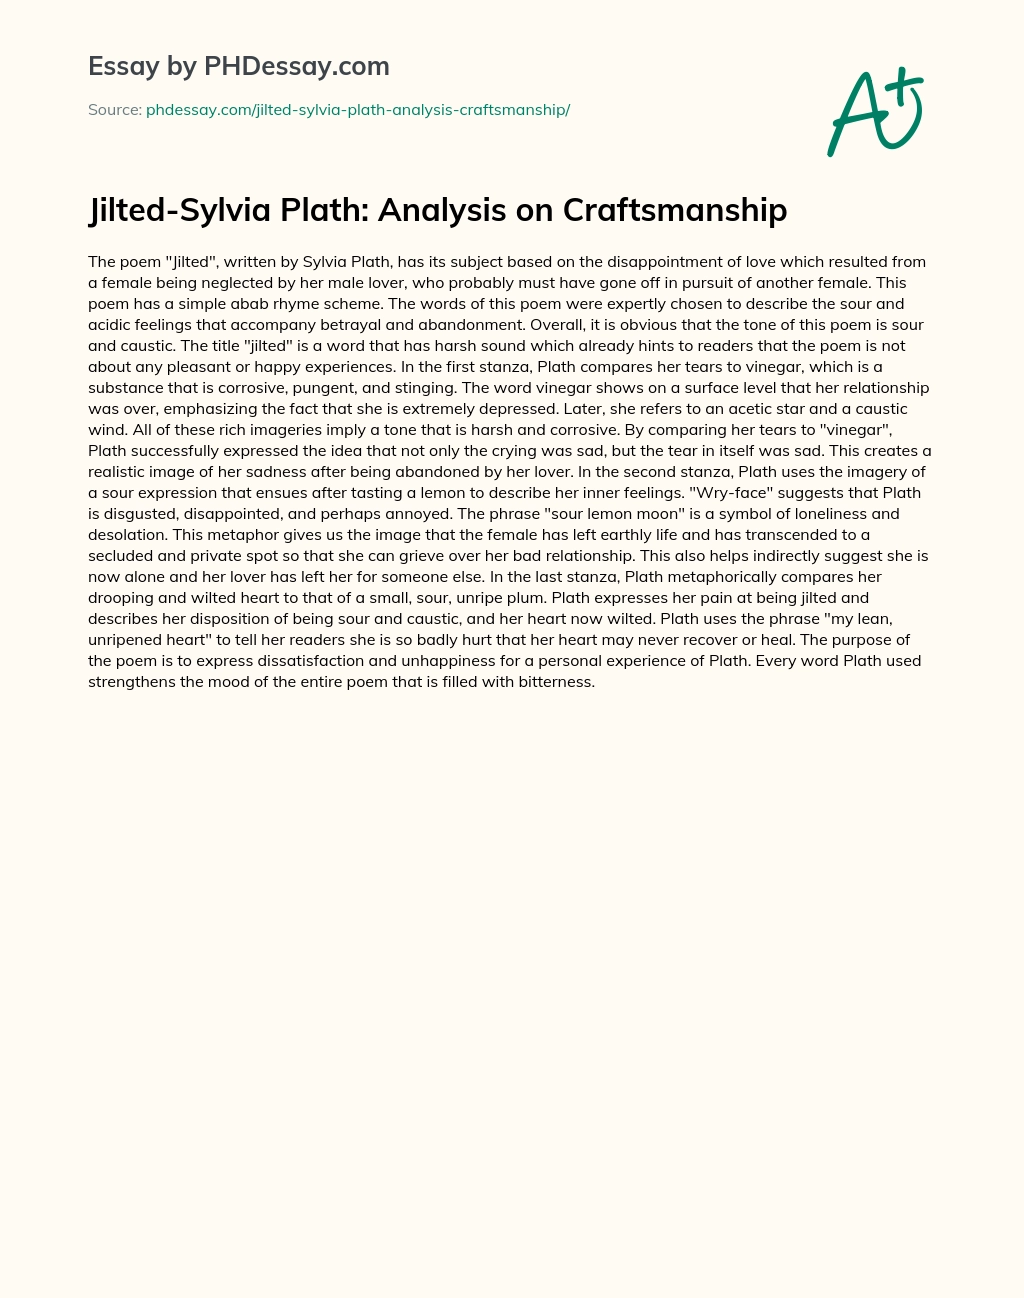 Jilted-Sylvia Plath: Analysis on Craftsmanship essay